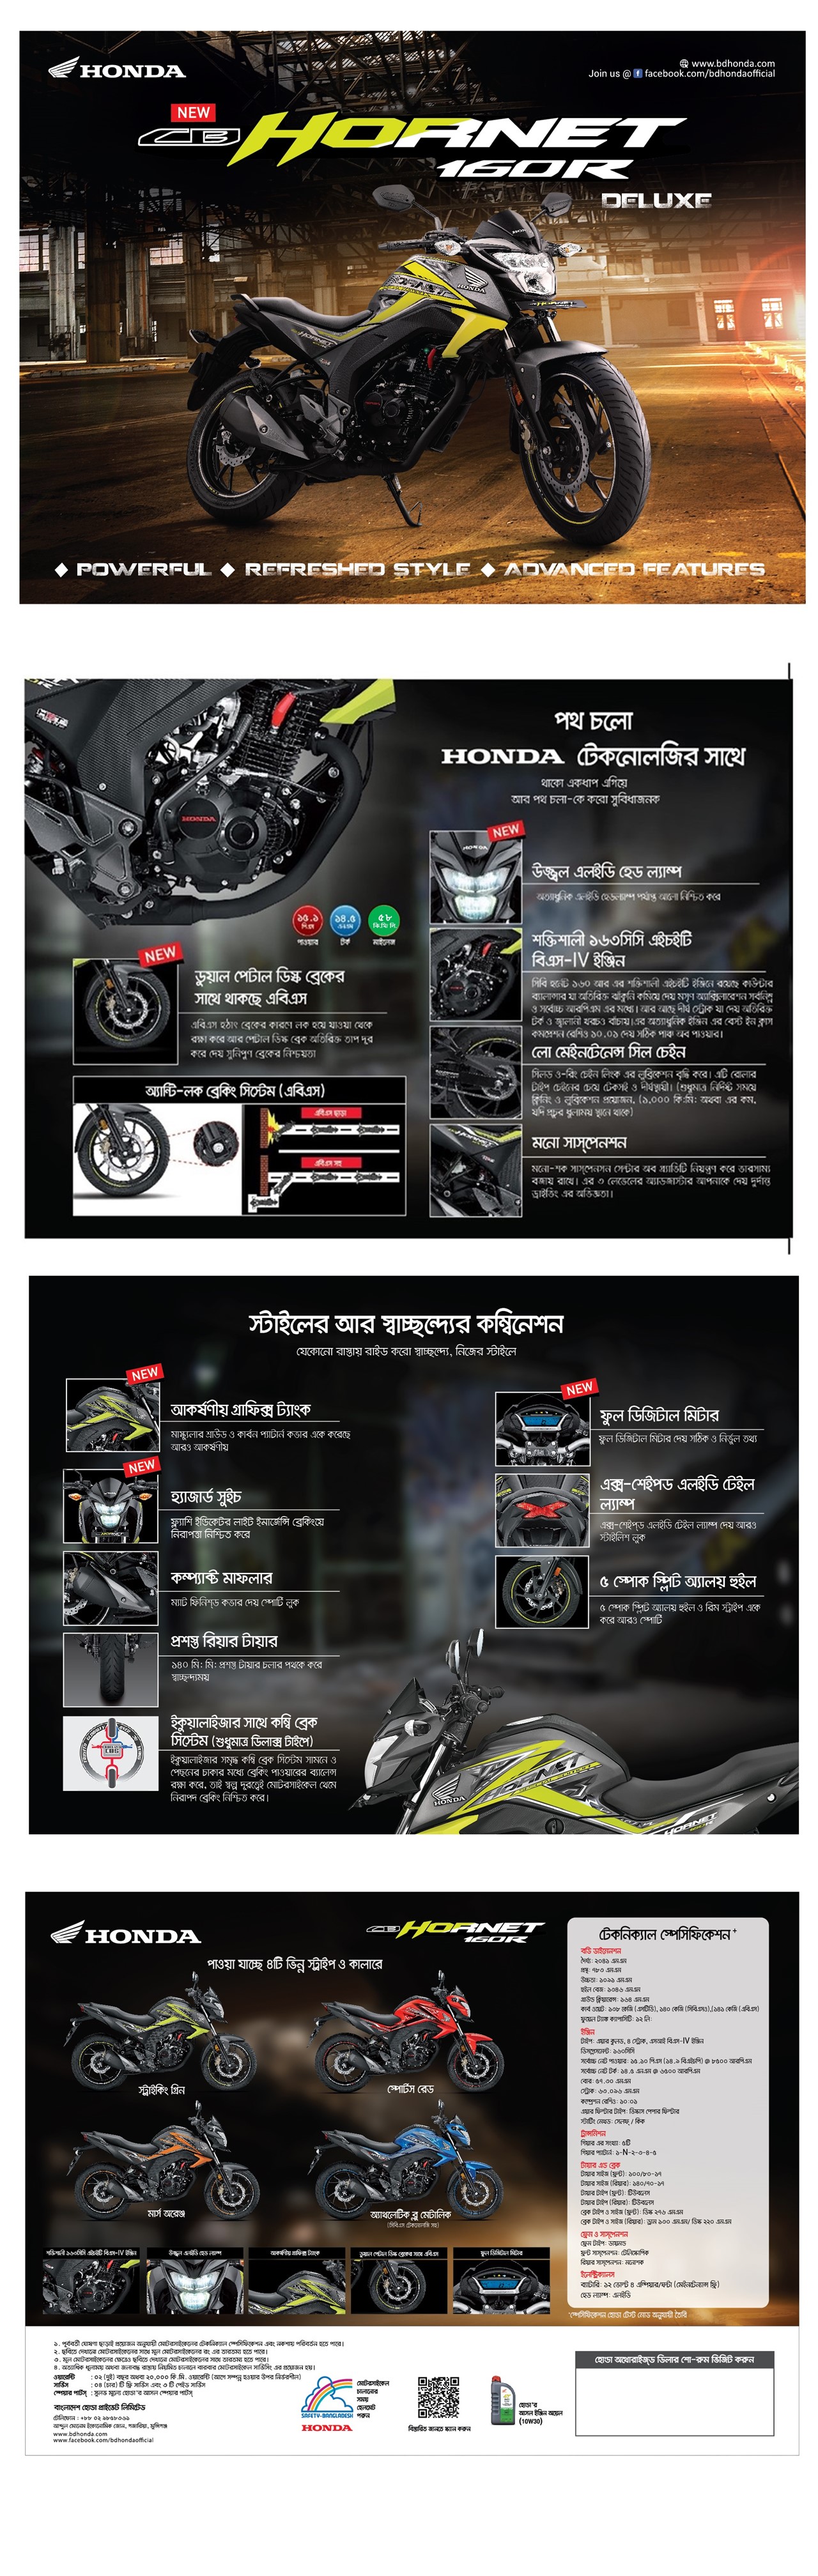 Honda Bike Hornet Price In Bangladesh